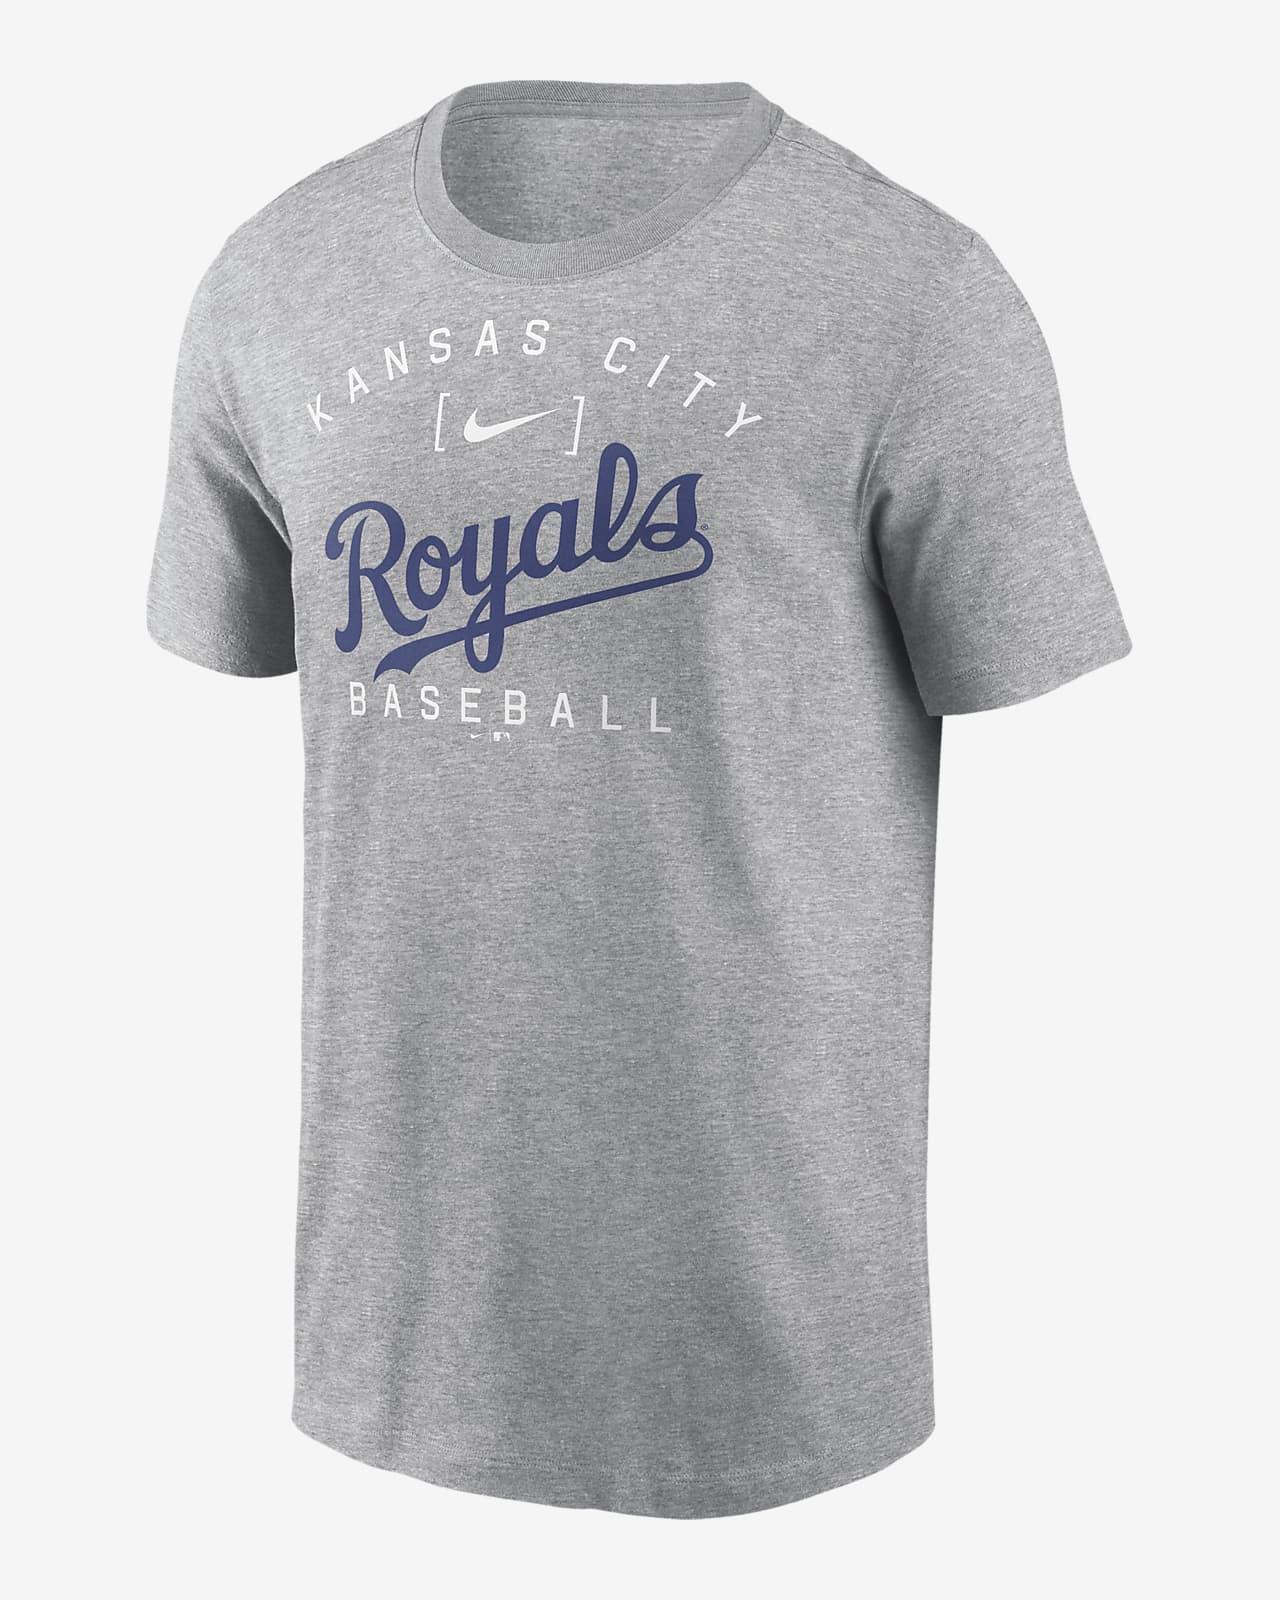 Playera Nike de la MLB para hombre Kansas City Royals Home Team Athletic Arch